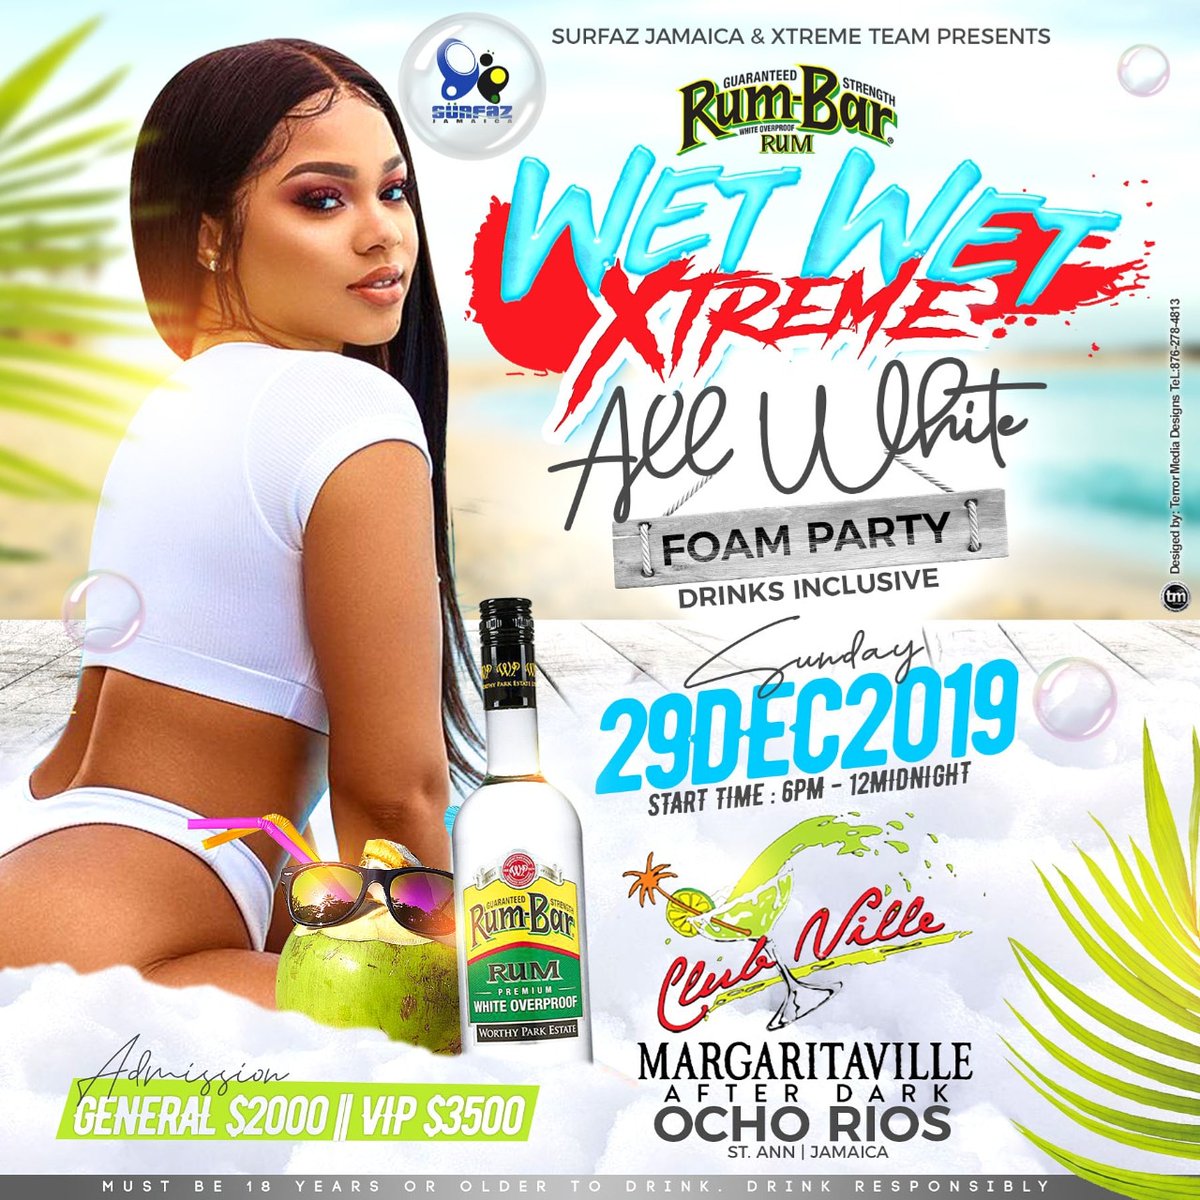 Sunday Dec 29th Club Ville Ochi..
RUM BAR WET WET XTREME 
6pm till Midnight💥💥
Mixed Drinks inclusive event

Live Perfomance: @hotfrass90

Juggling by:
 #zjdymond 
@zjchrome 
@badxthaboss 
#mixmasteroverdose 
@rumbarjamaica @wet_wet_xtreme_jamaica #wetwetxtreme